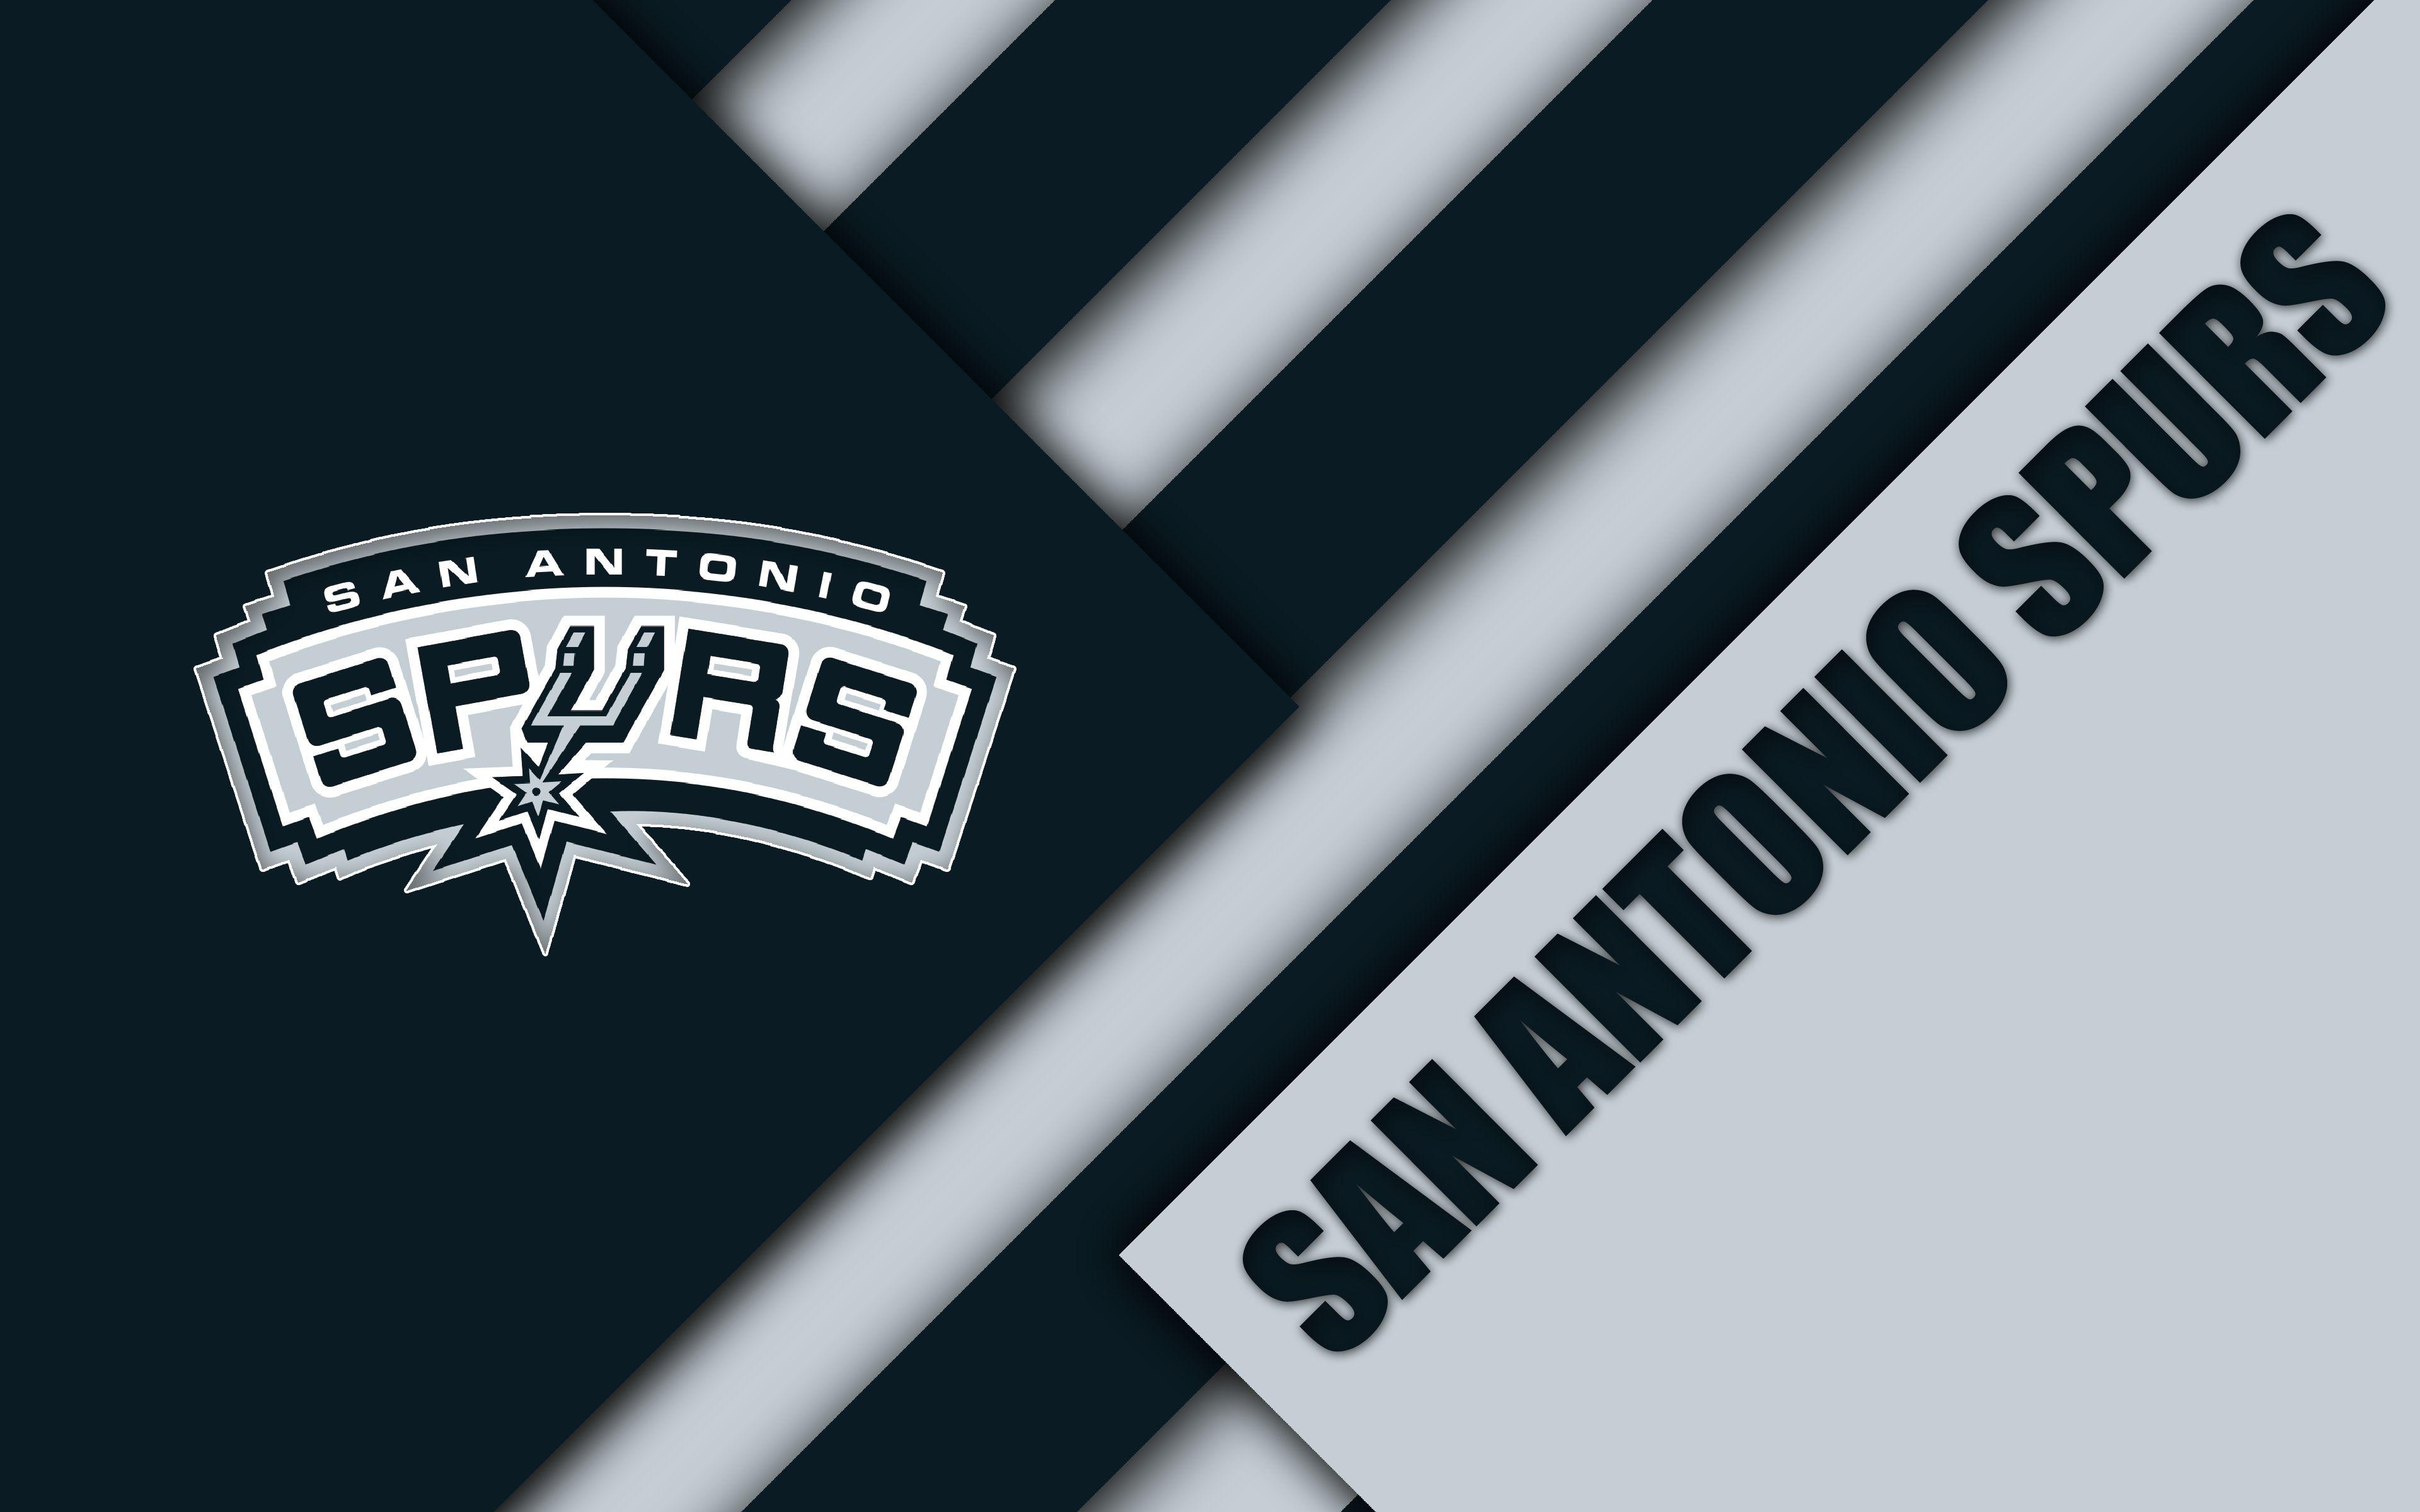 San Antonio Spurs Wallpapers - Top Free